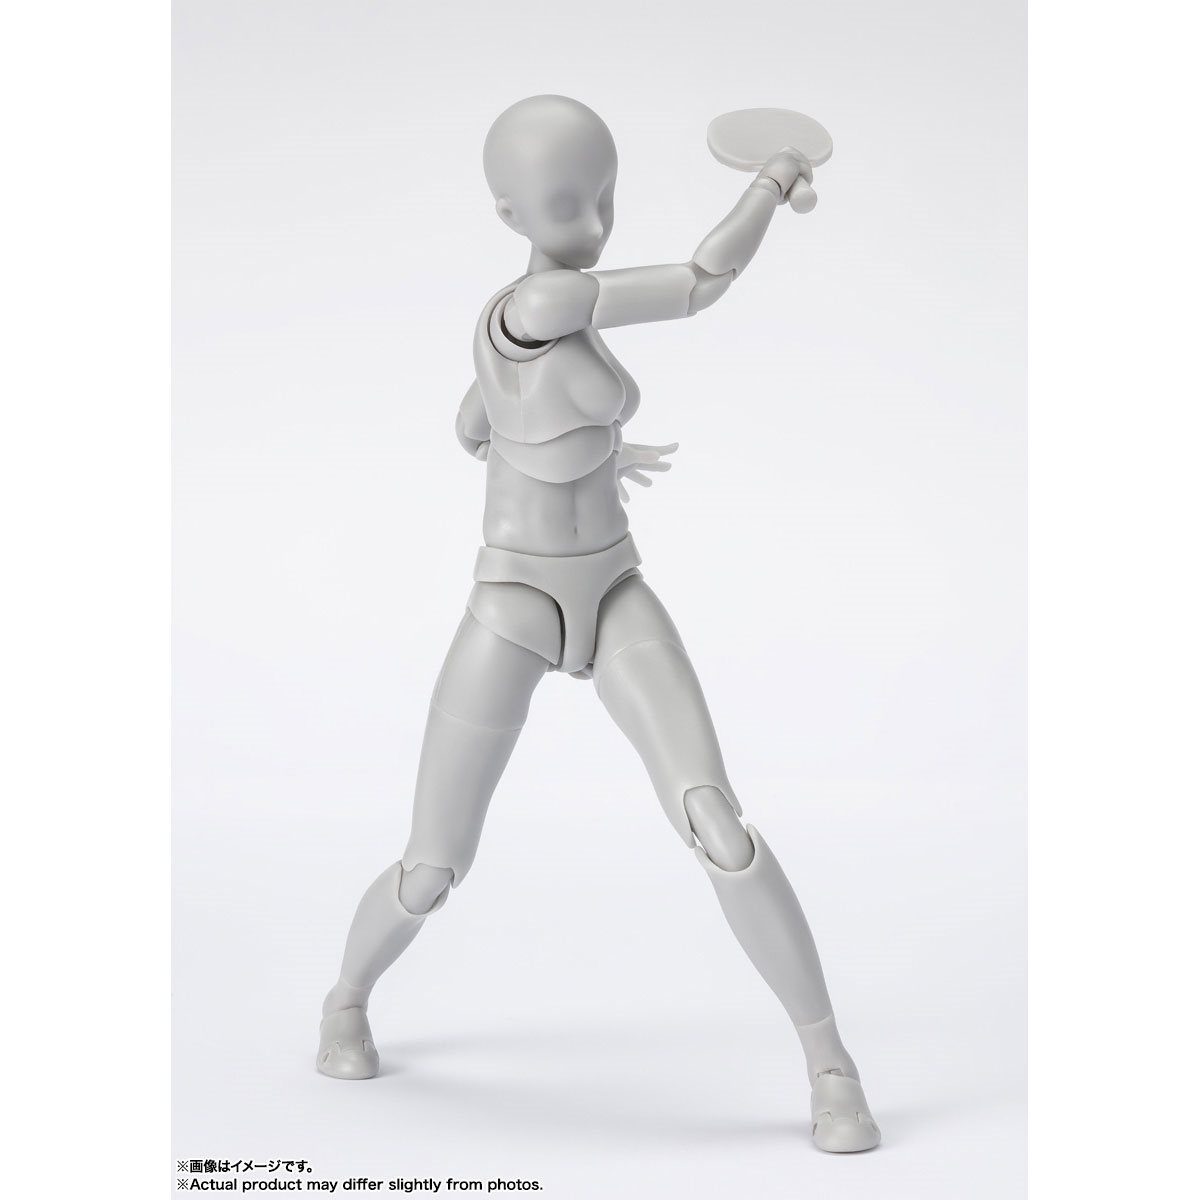 Kun + Chan - Sports Edition Figures - 2 in 1 Offer - Body Kun Dolls